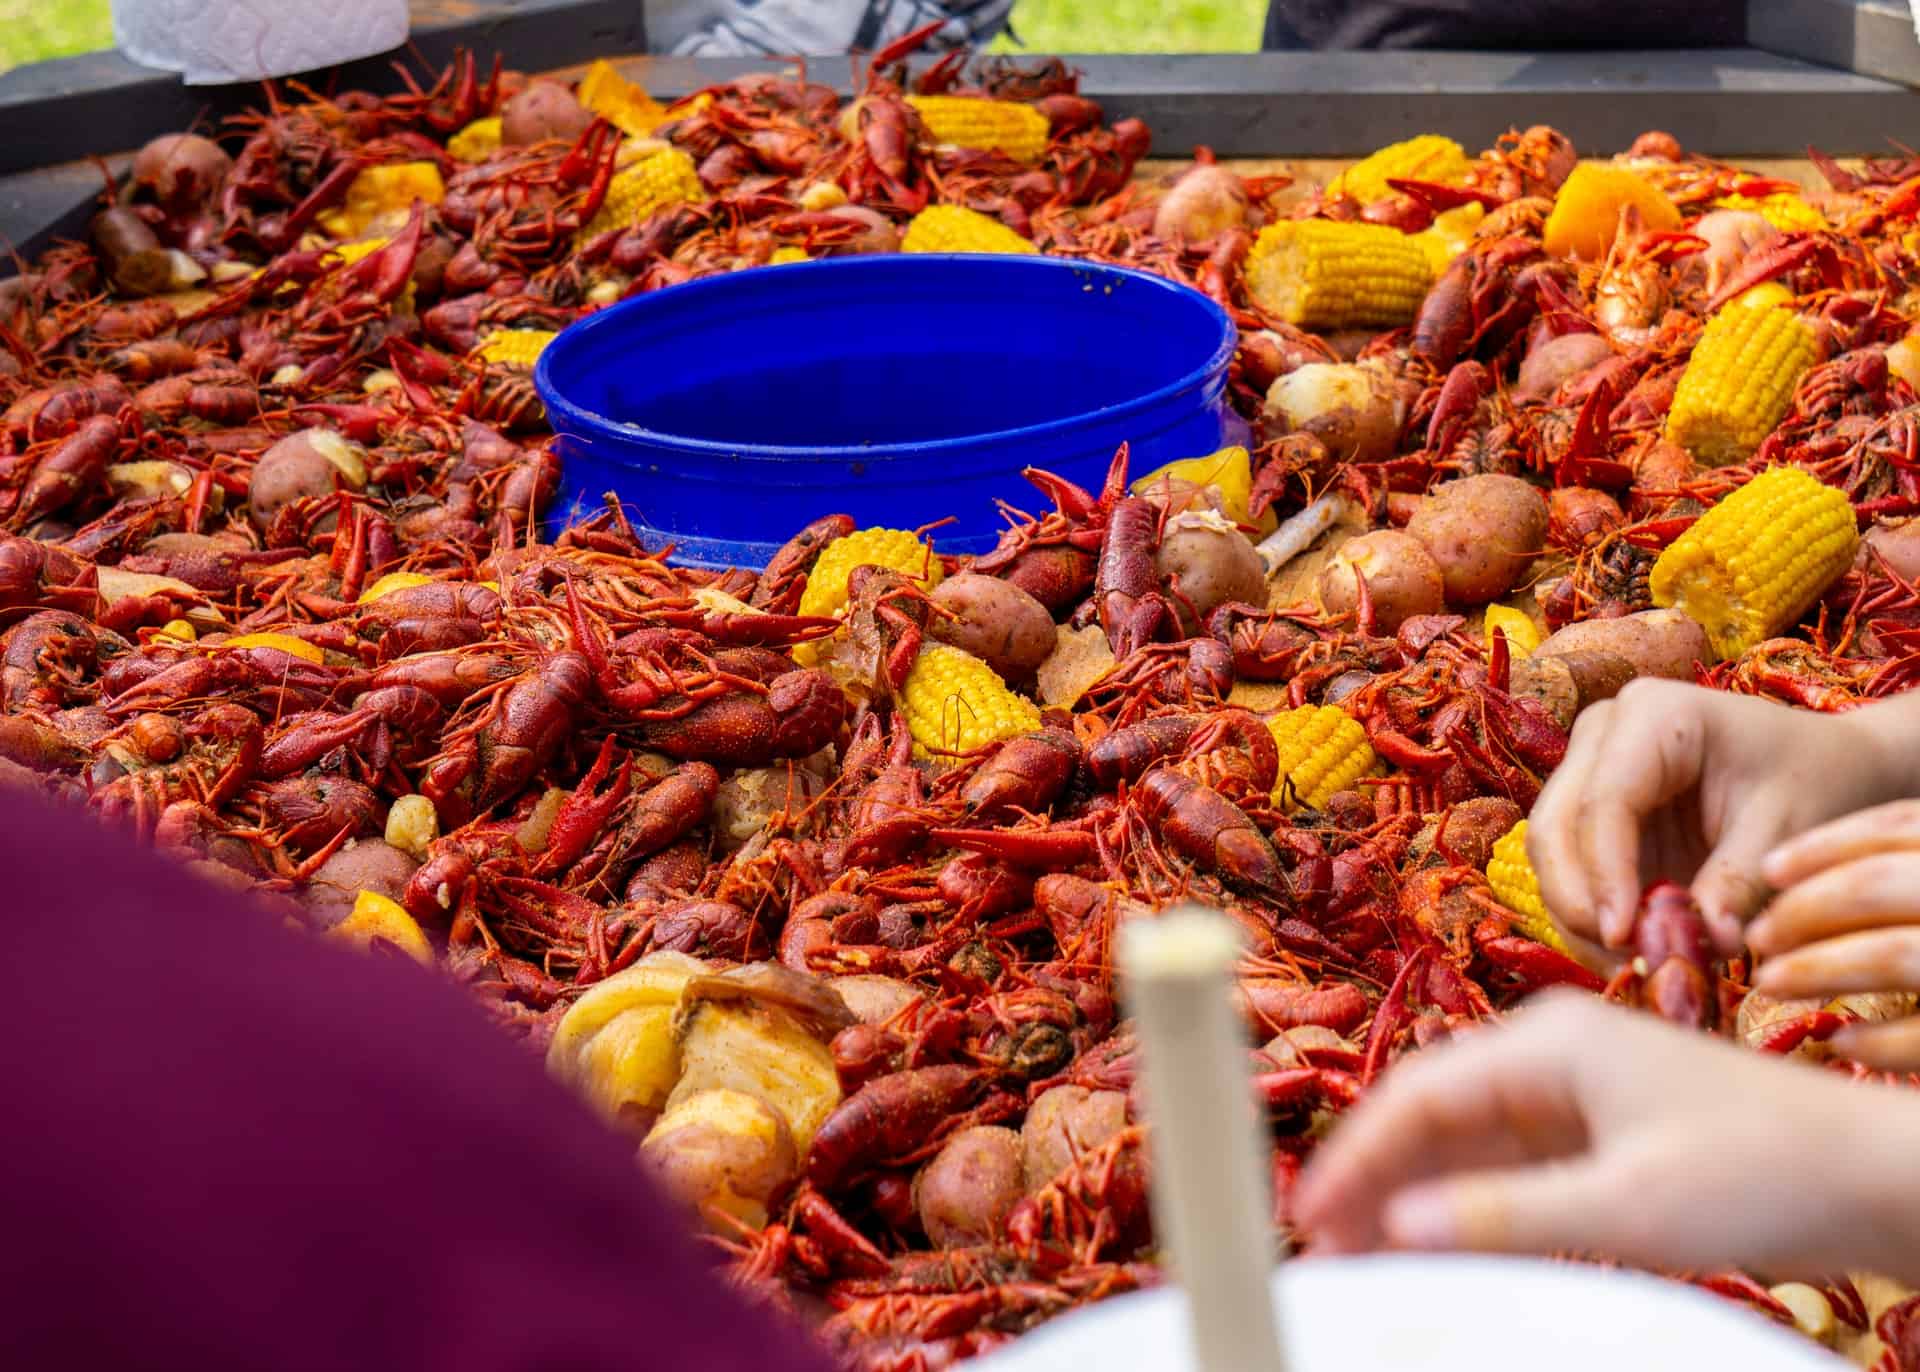 Best things to do in Lafayette Louisiana - Lane Fournerat - Crawfish Boil by Logan Ellzey on Unsplash